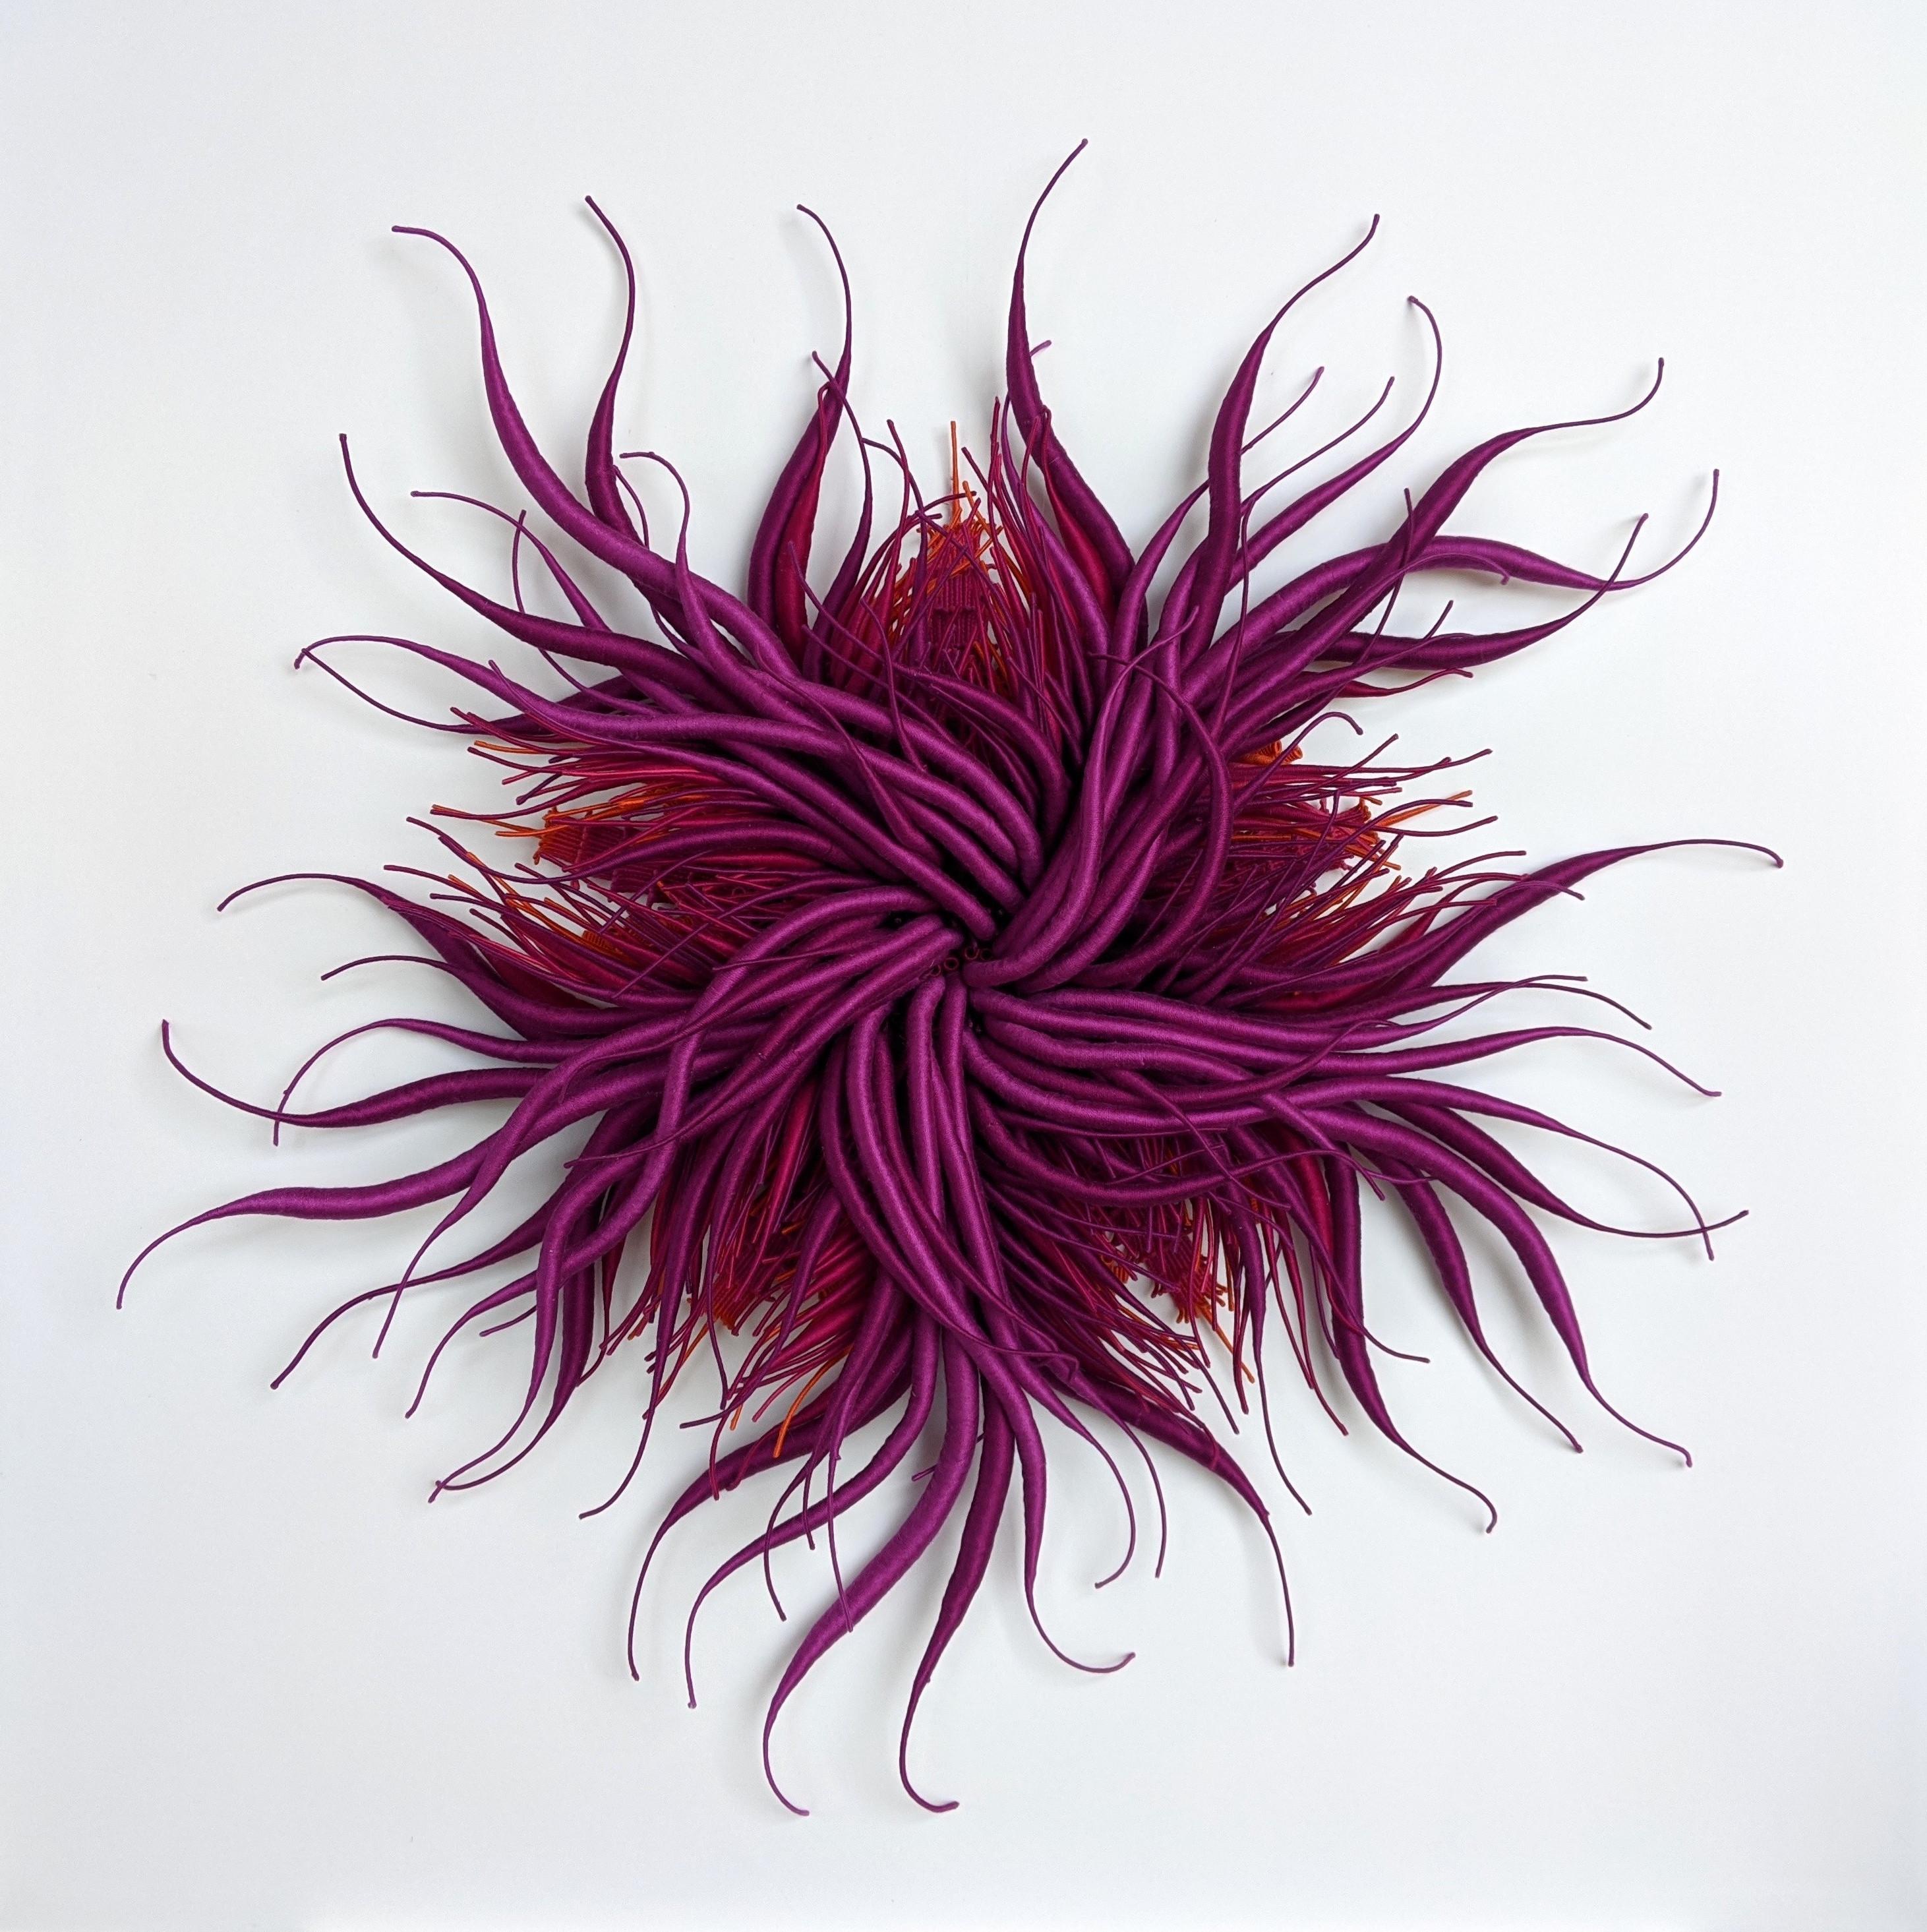 Exemplar 19, gerahmte, von der Natur inspirierte lila, rote handgefärbte Fiberglas-Skulptur